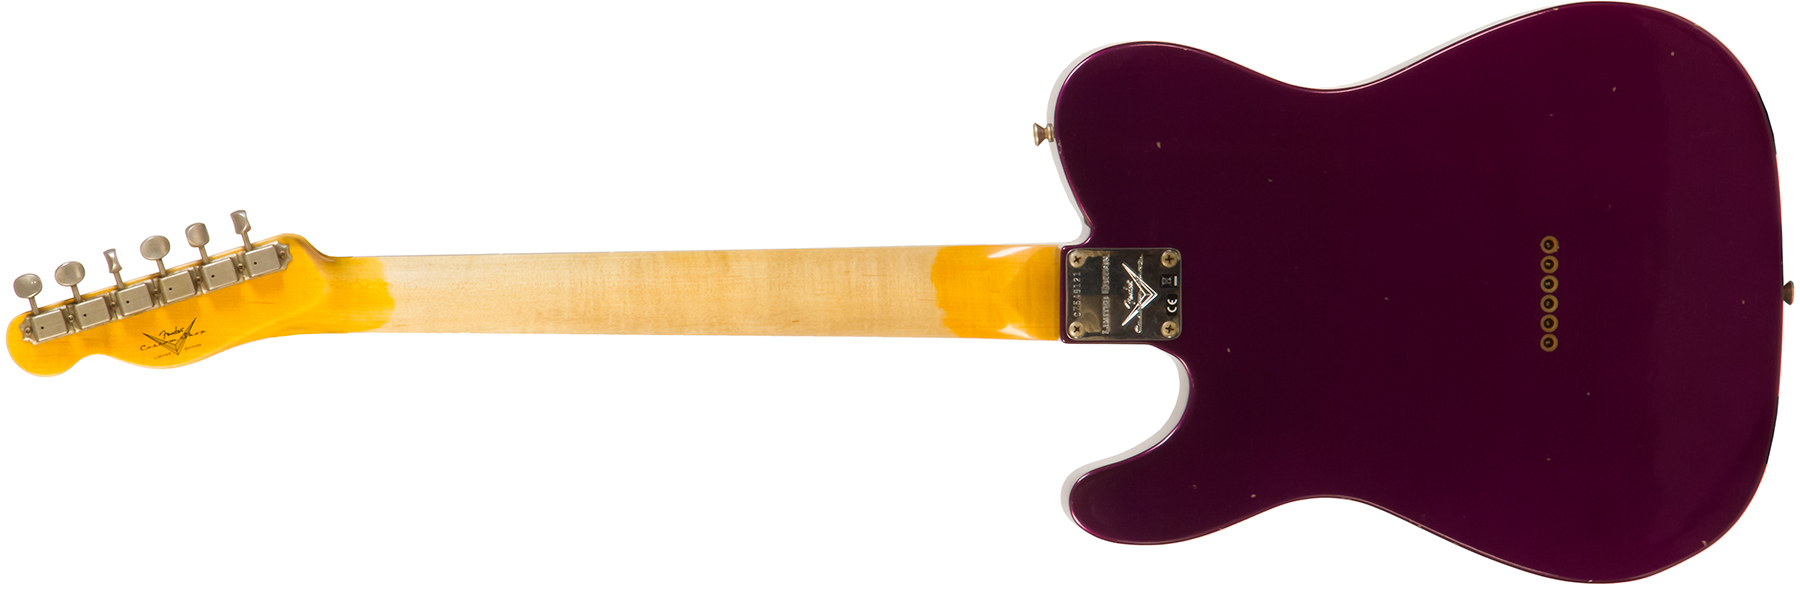 Fender Custom Shop Tele 1960 Rw #cz549121 - Journeyman Relic Purple Metallic - Guitarra eléctrica con forma de tel - Variation 1